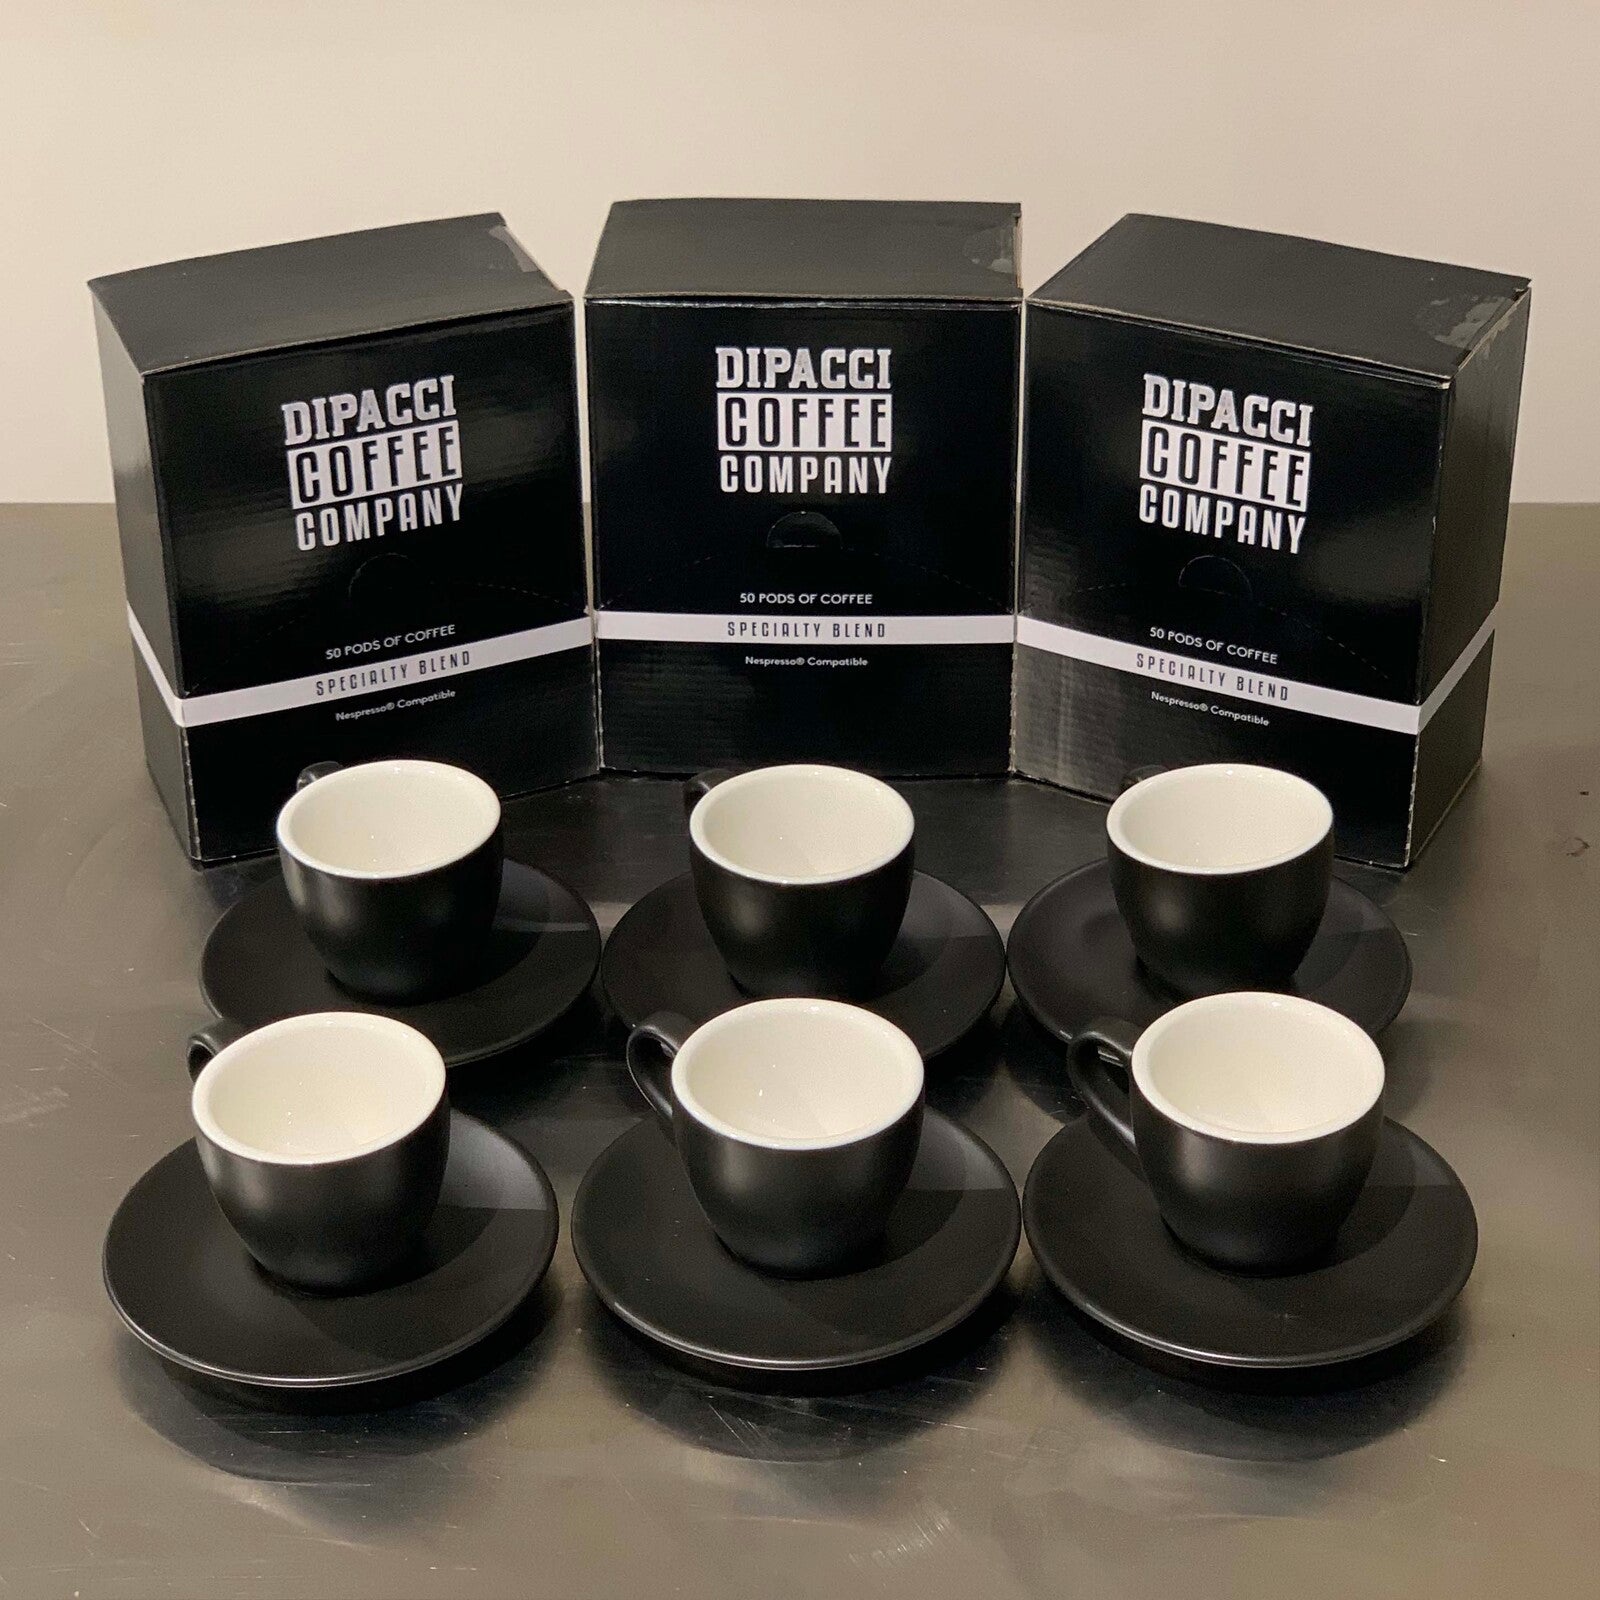 Dipacci Coffee Co. Dipacci Coffee Pods - Capsules (Nespresso Compatible) + Free Mug Set